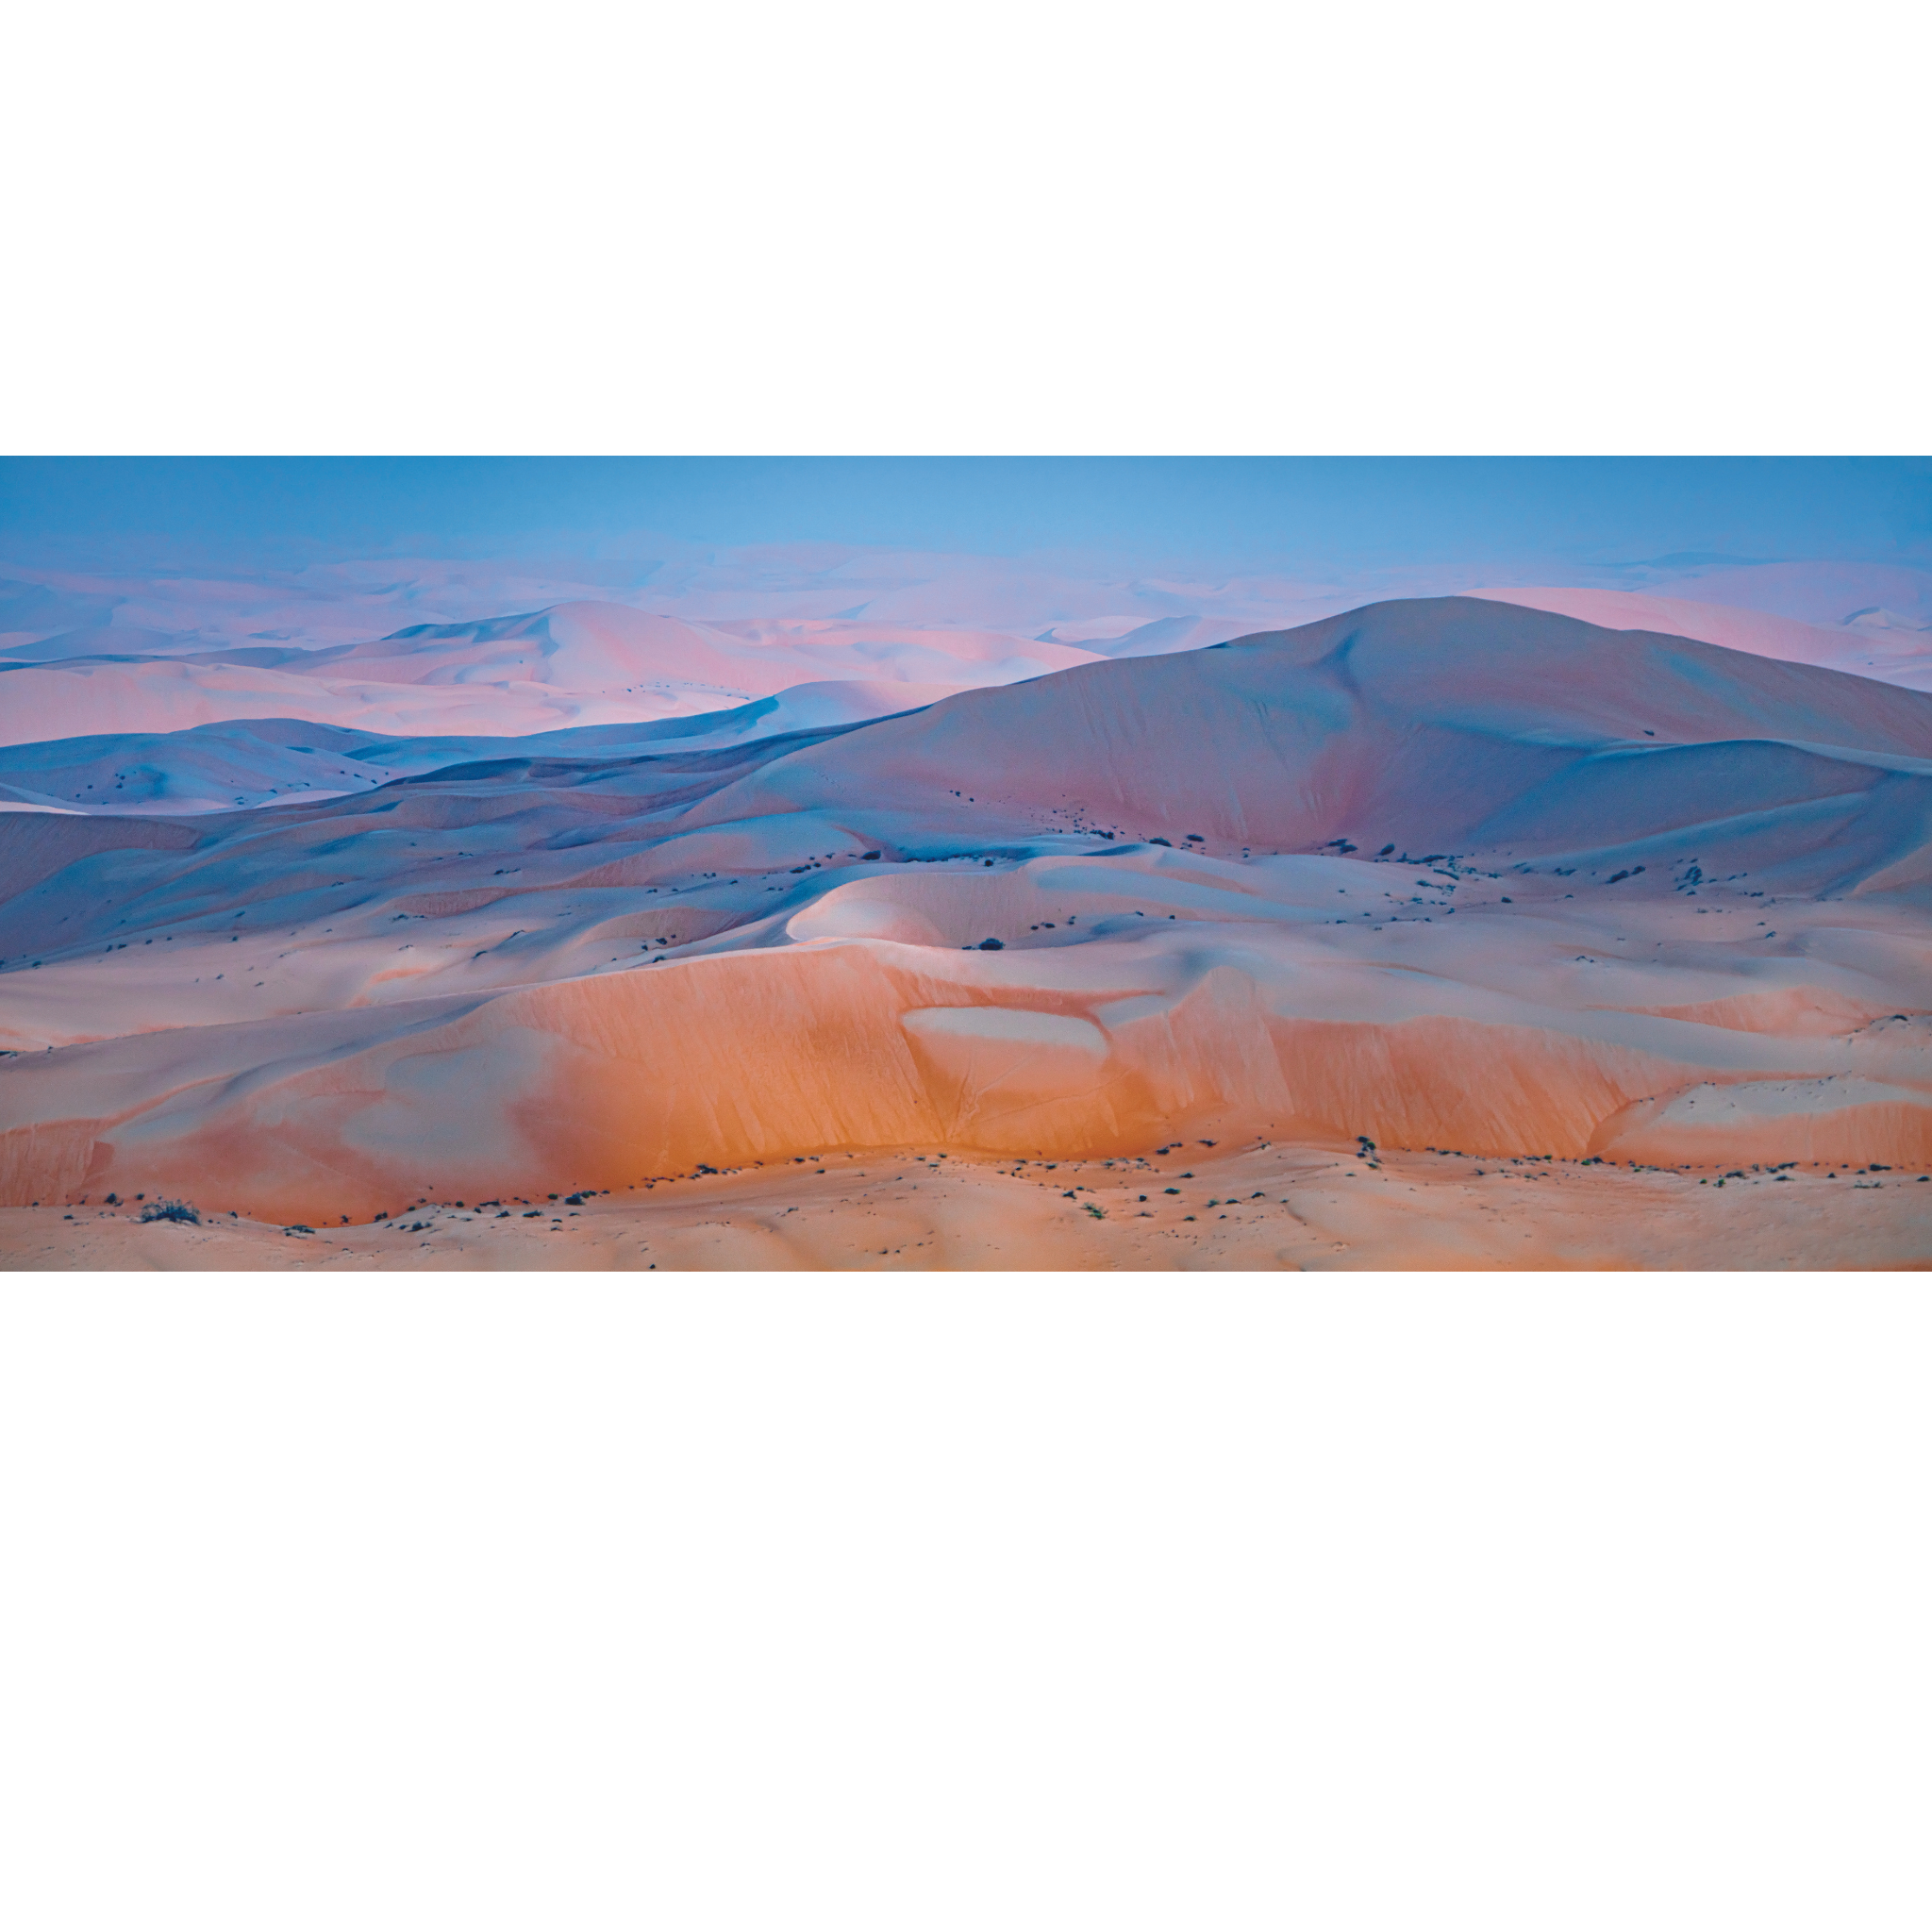 Dunes of Serenity Il by Khalid Alastad